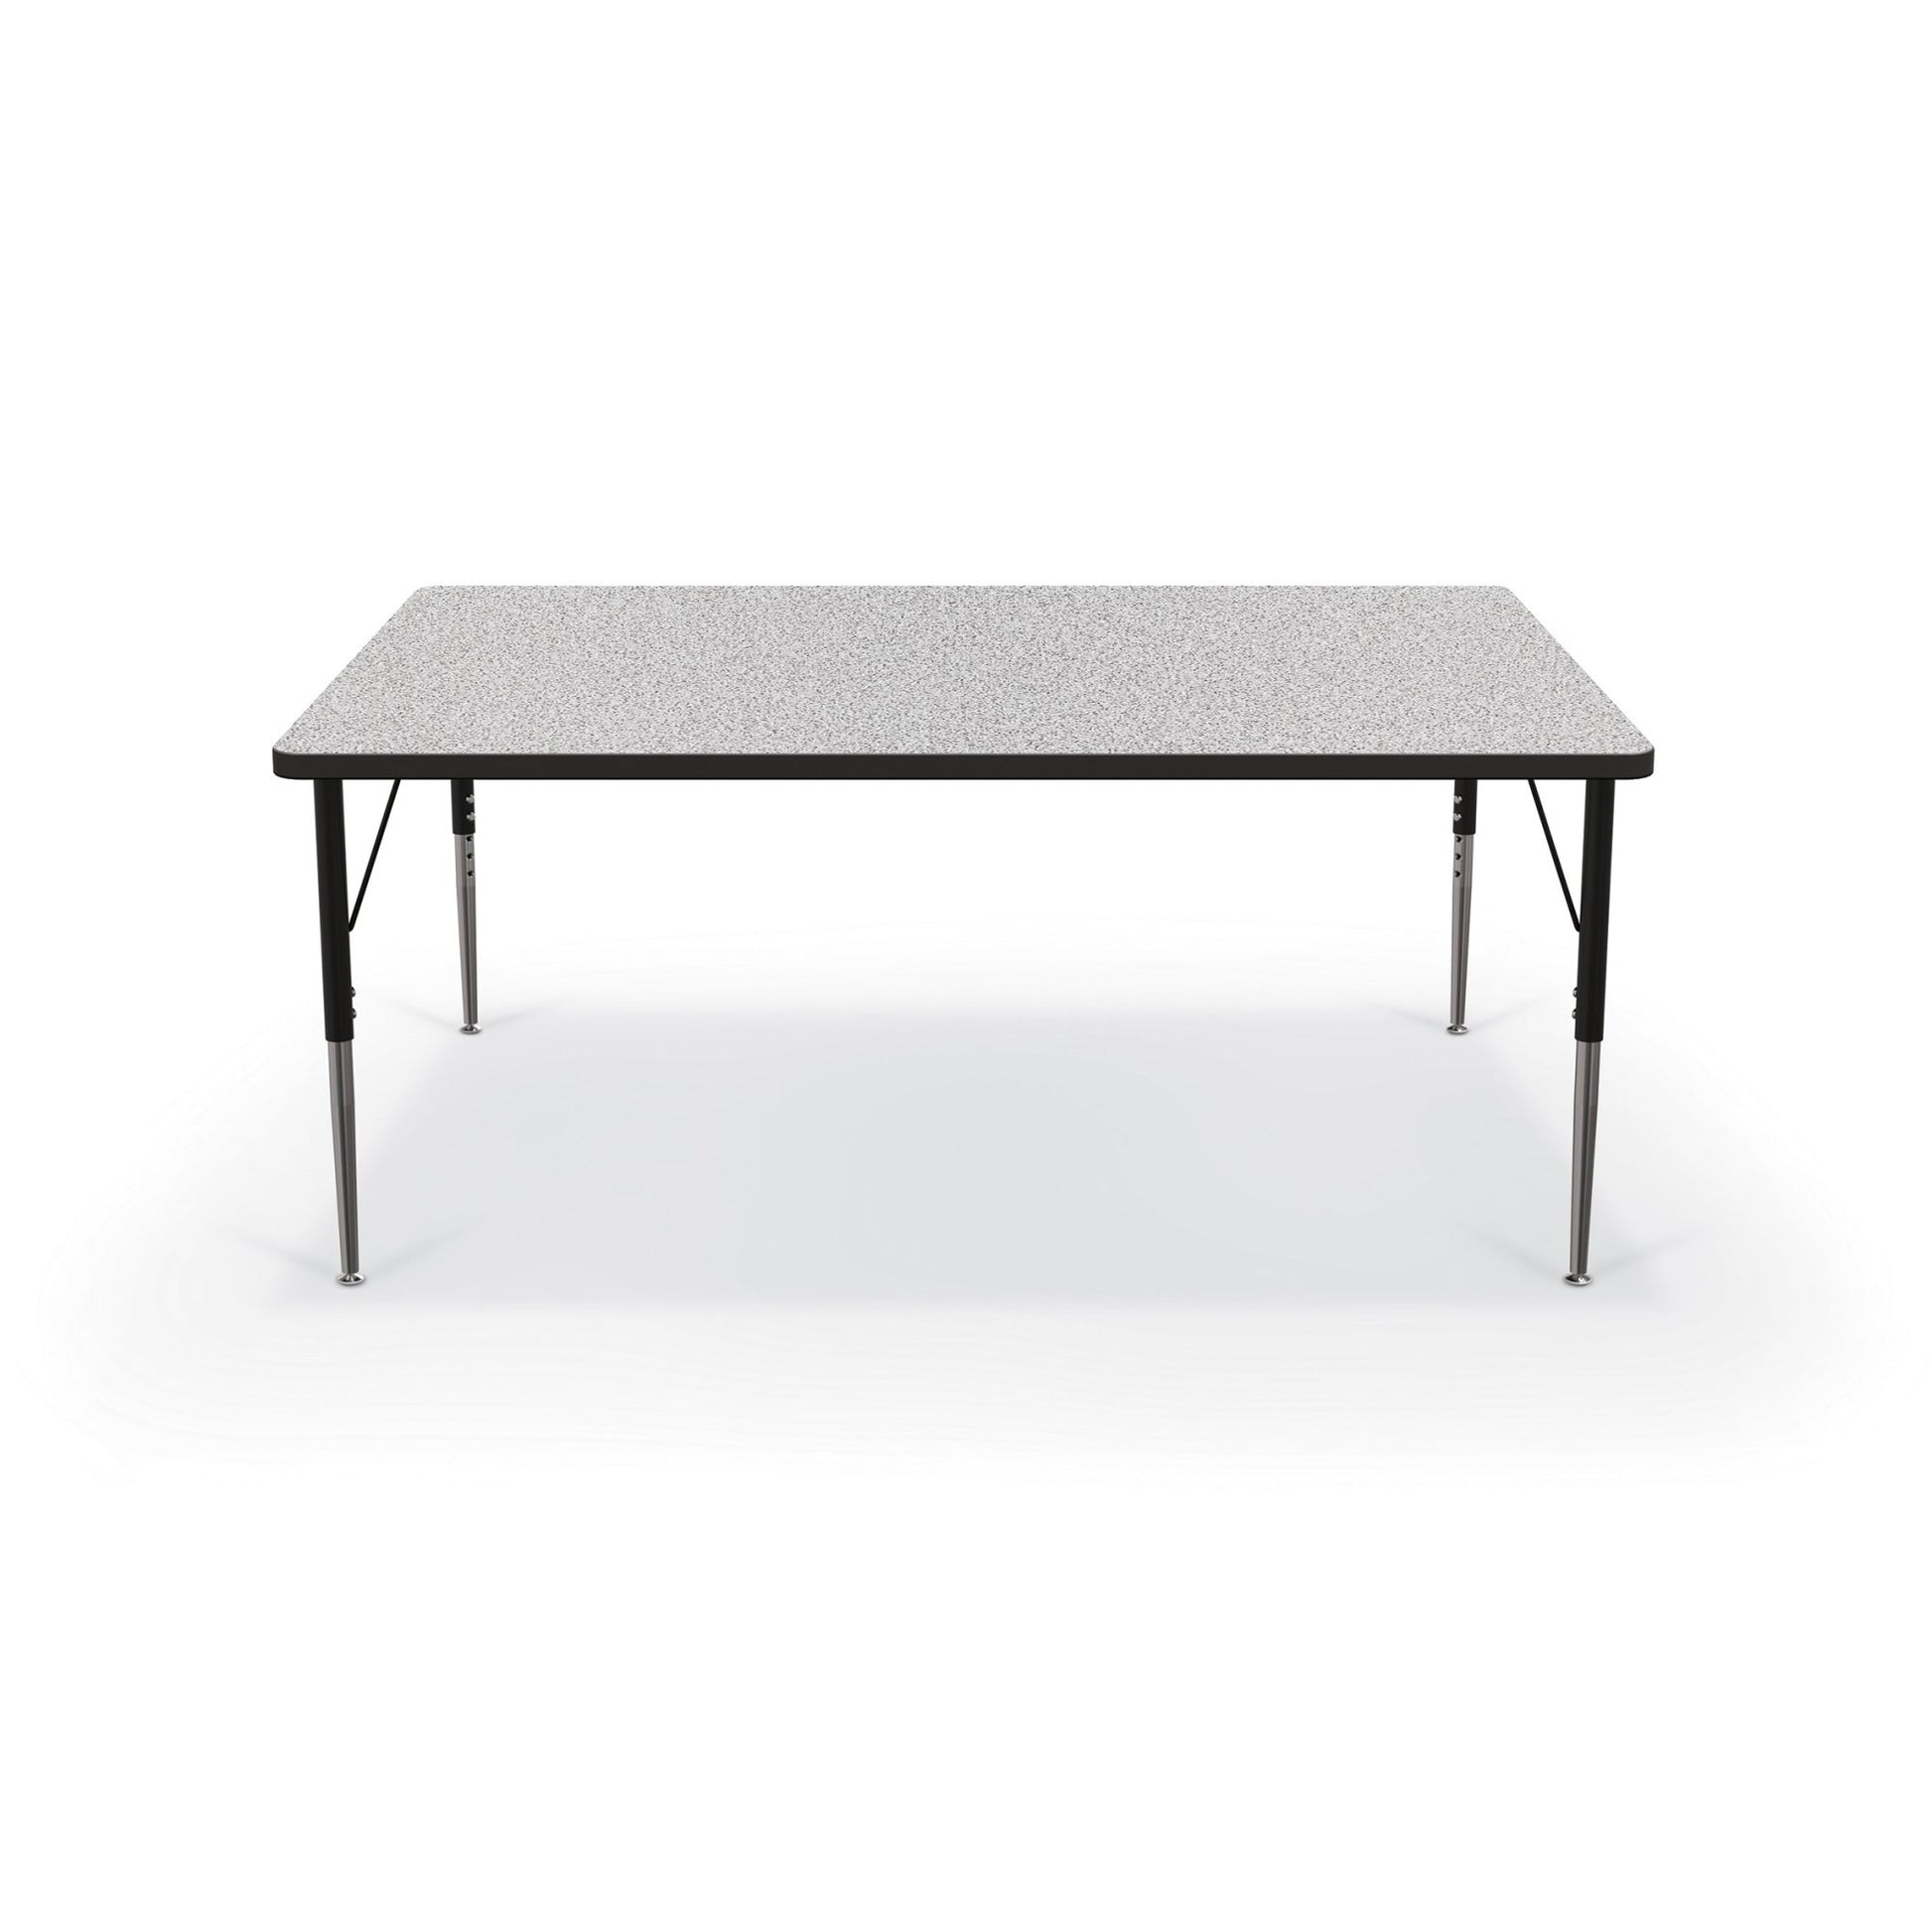 Mooreco Activity Table - 48"D x 60"W - Rectangle - Black Edgeband (Mooreco 90527-J) - SchoolOutlet